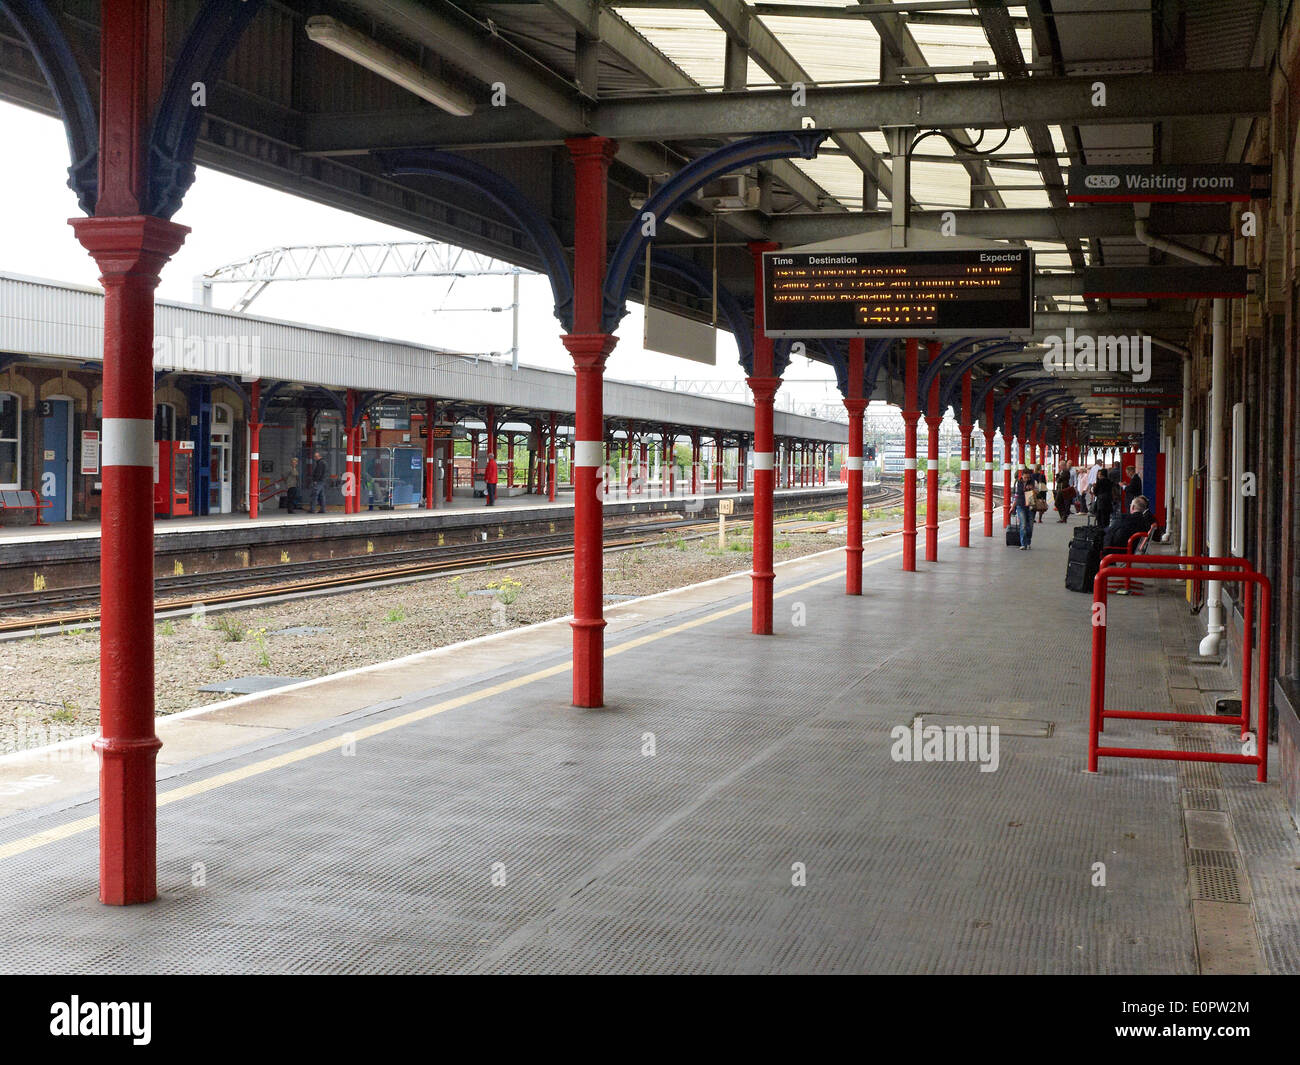 Railway station in Stockport Cheshire UK Stock Photo